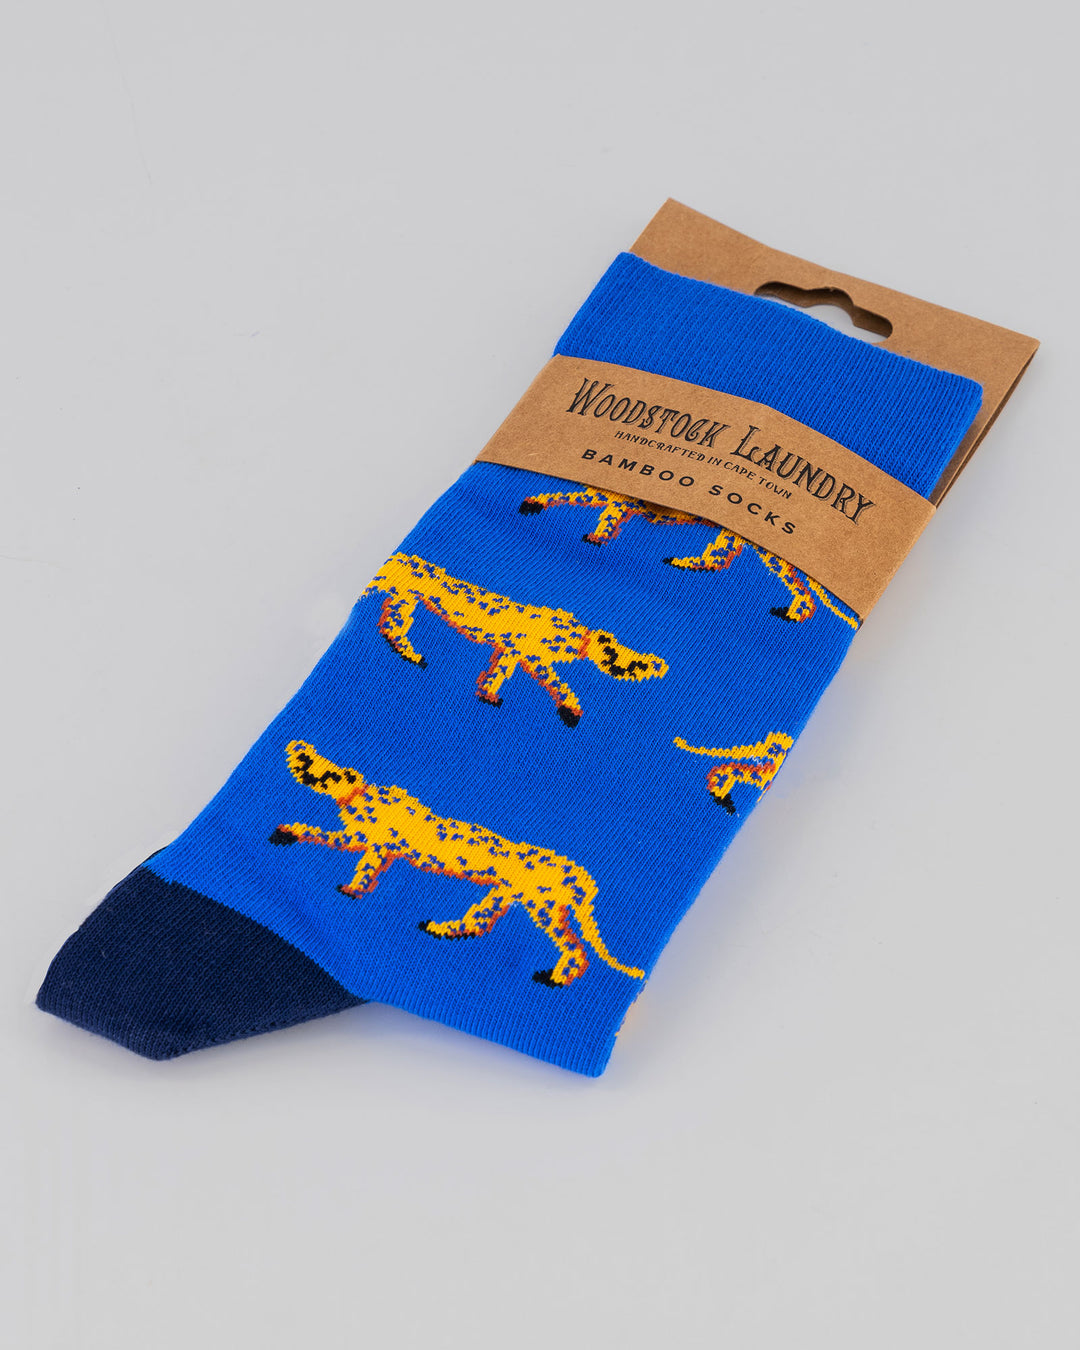 Socks Blue Cheetahs Packaging - Woodstock Laundry